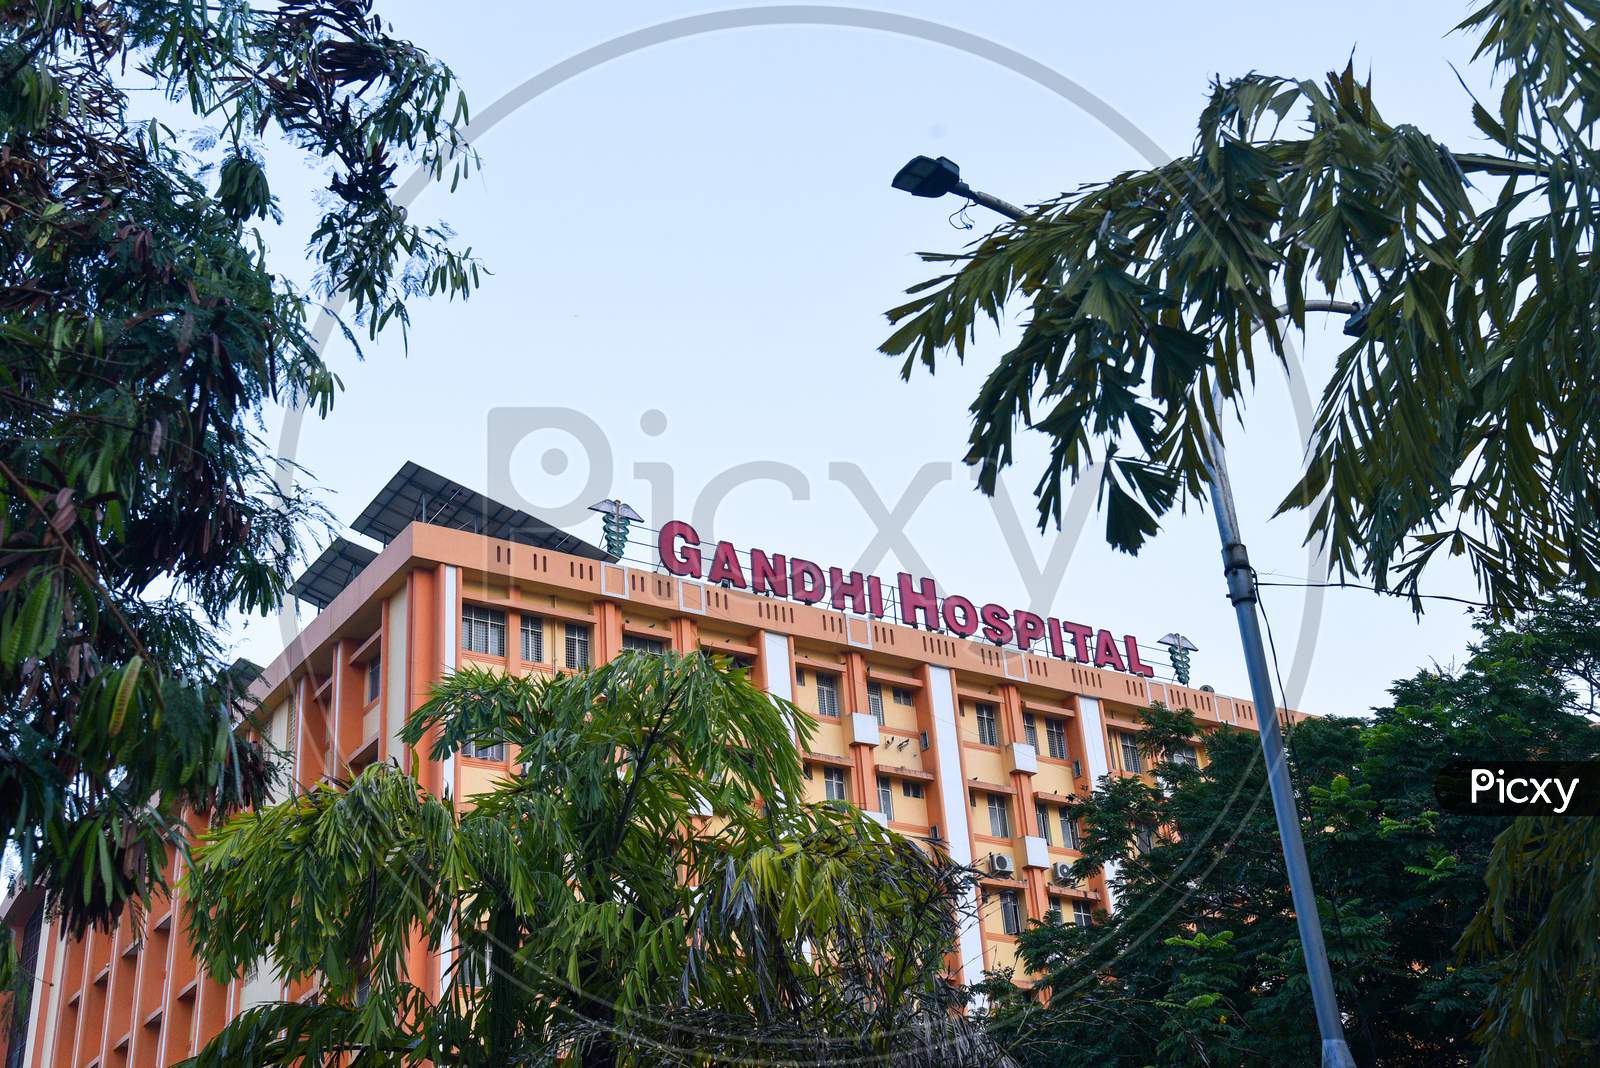 Gandhi Hospital,Hyderabad